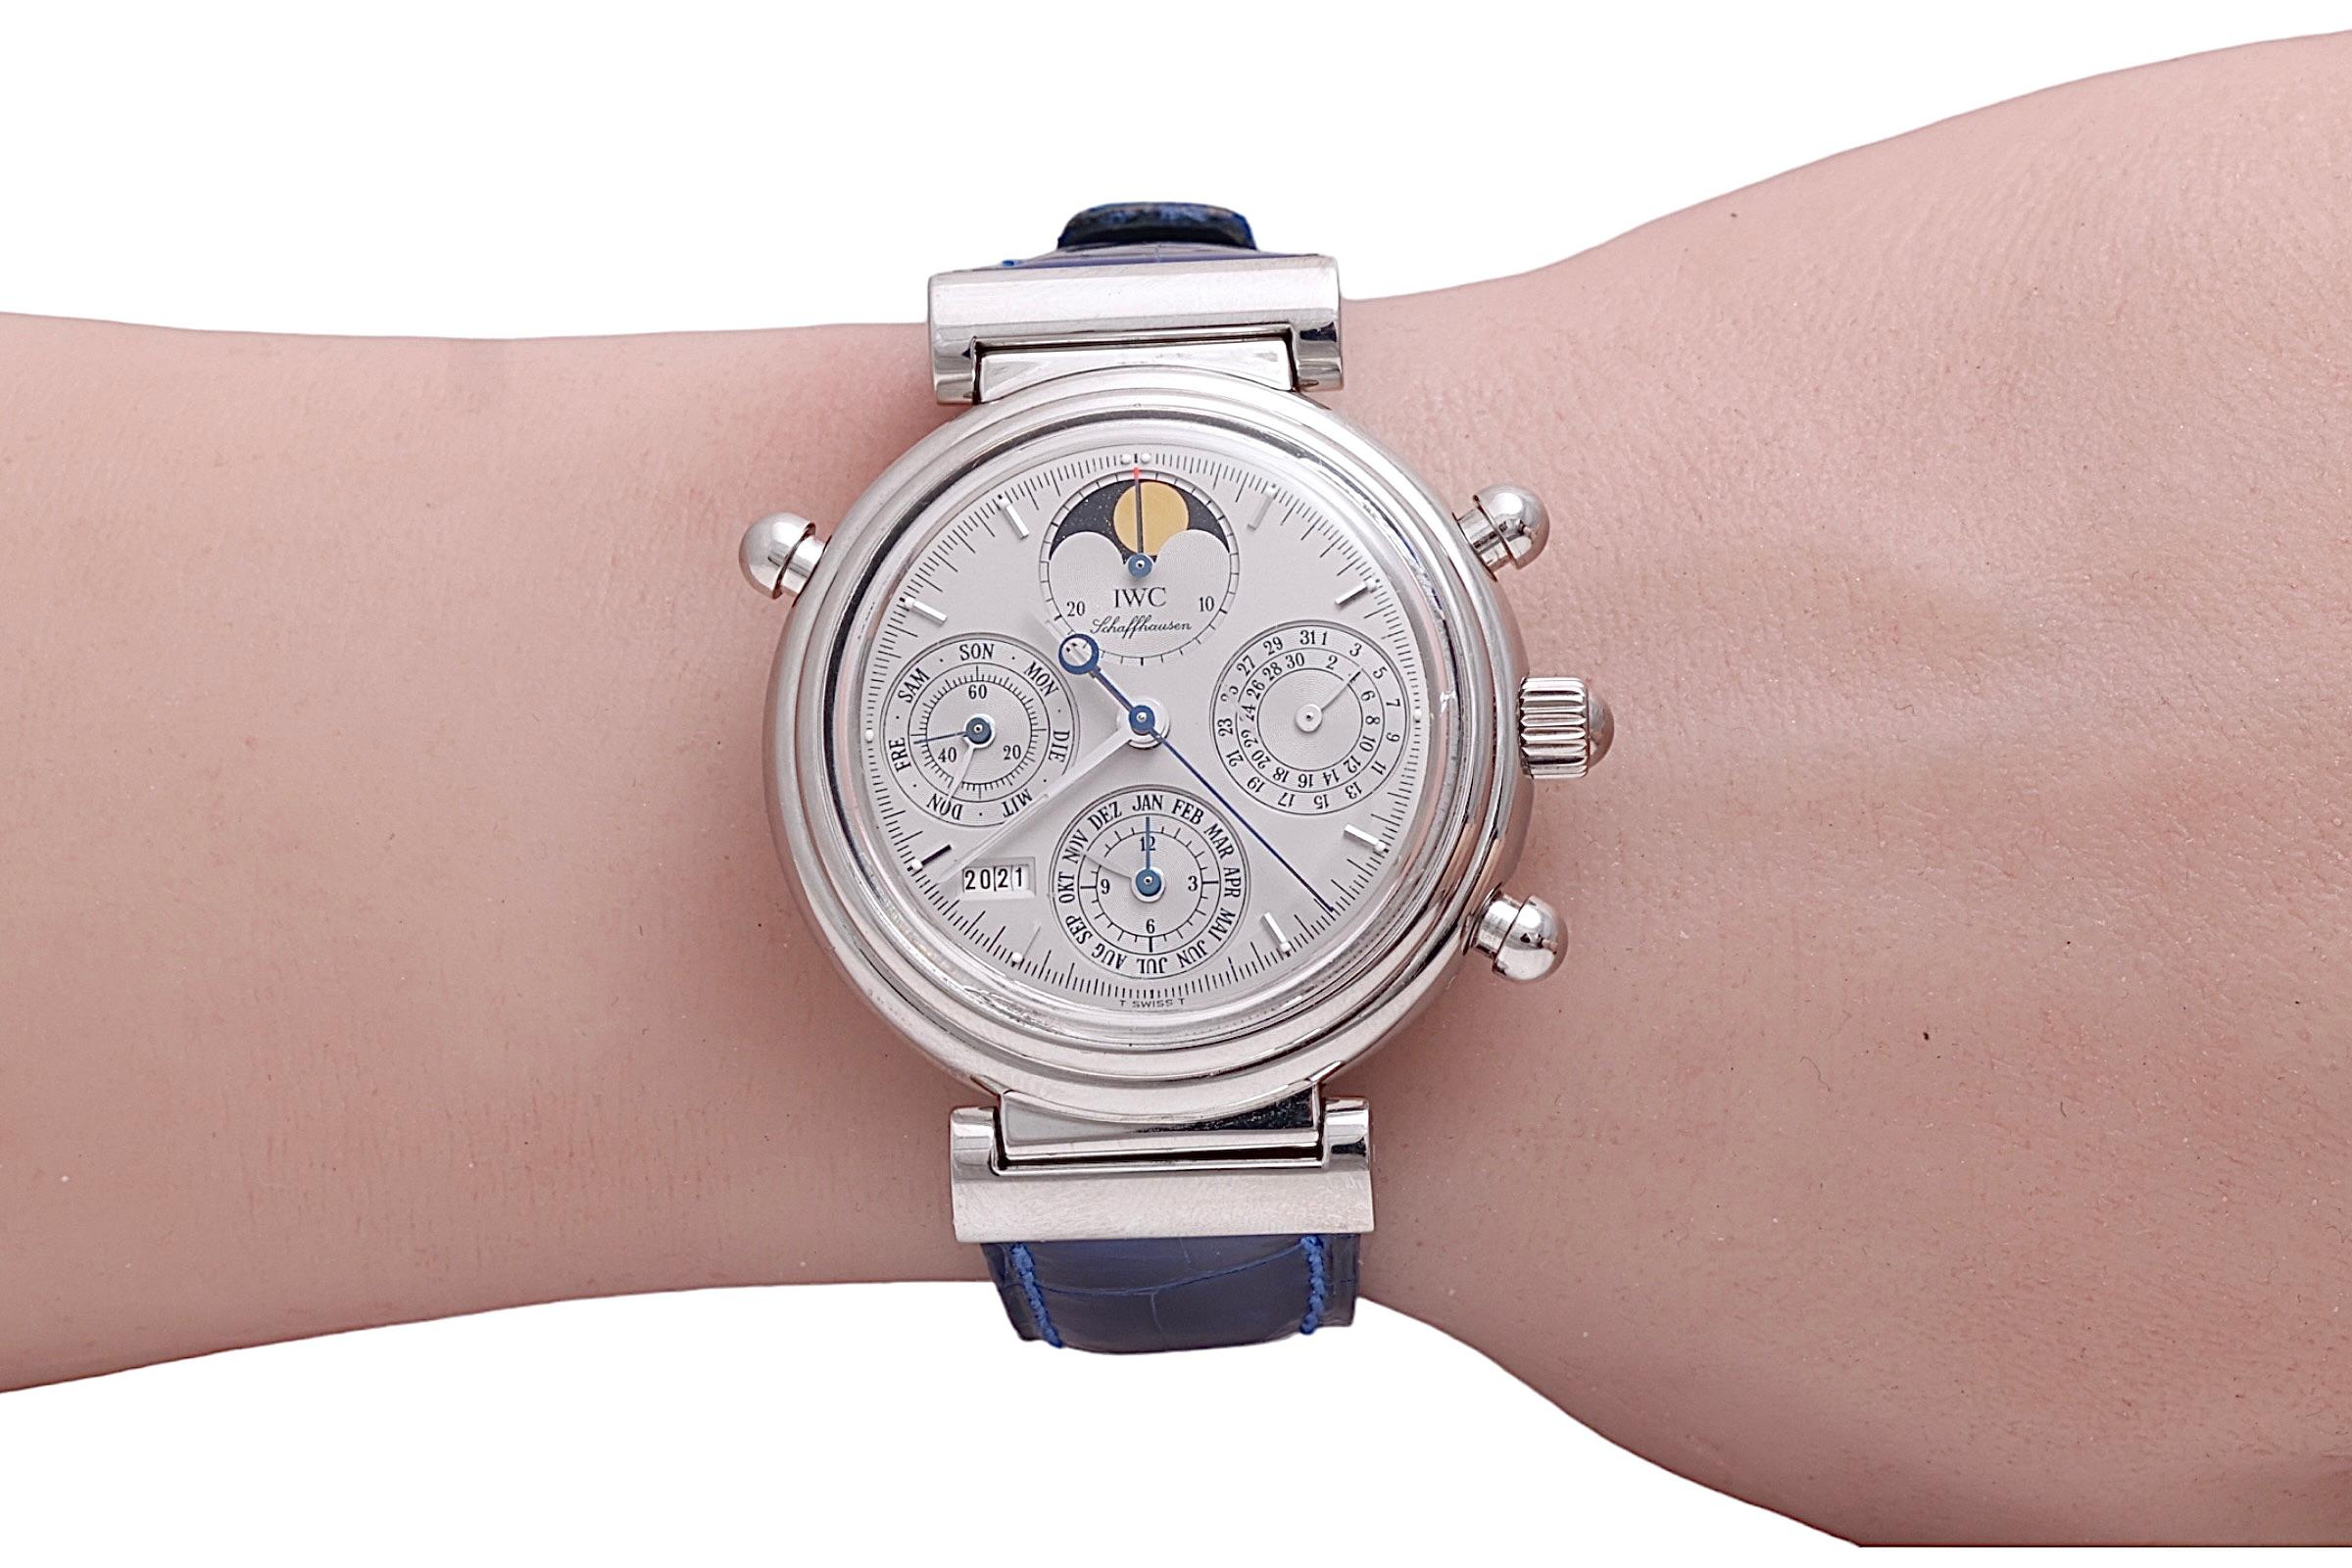 Platinum IWC Perpetual Calendar Split Second Chronograph Limited Wrist Watch3751 For Sale 9